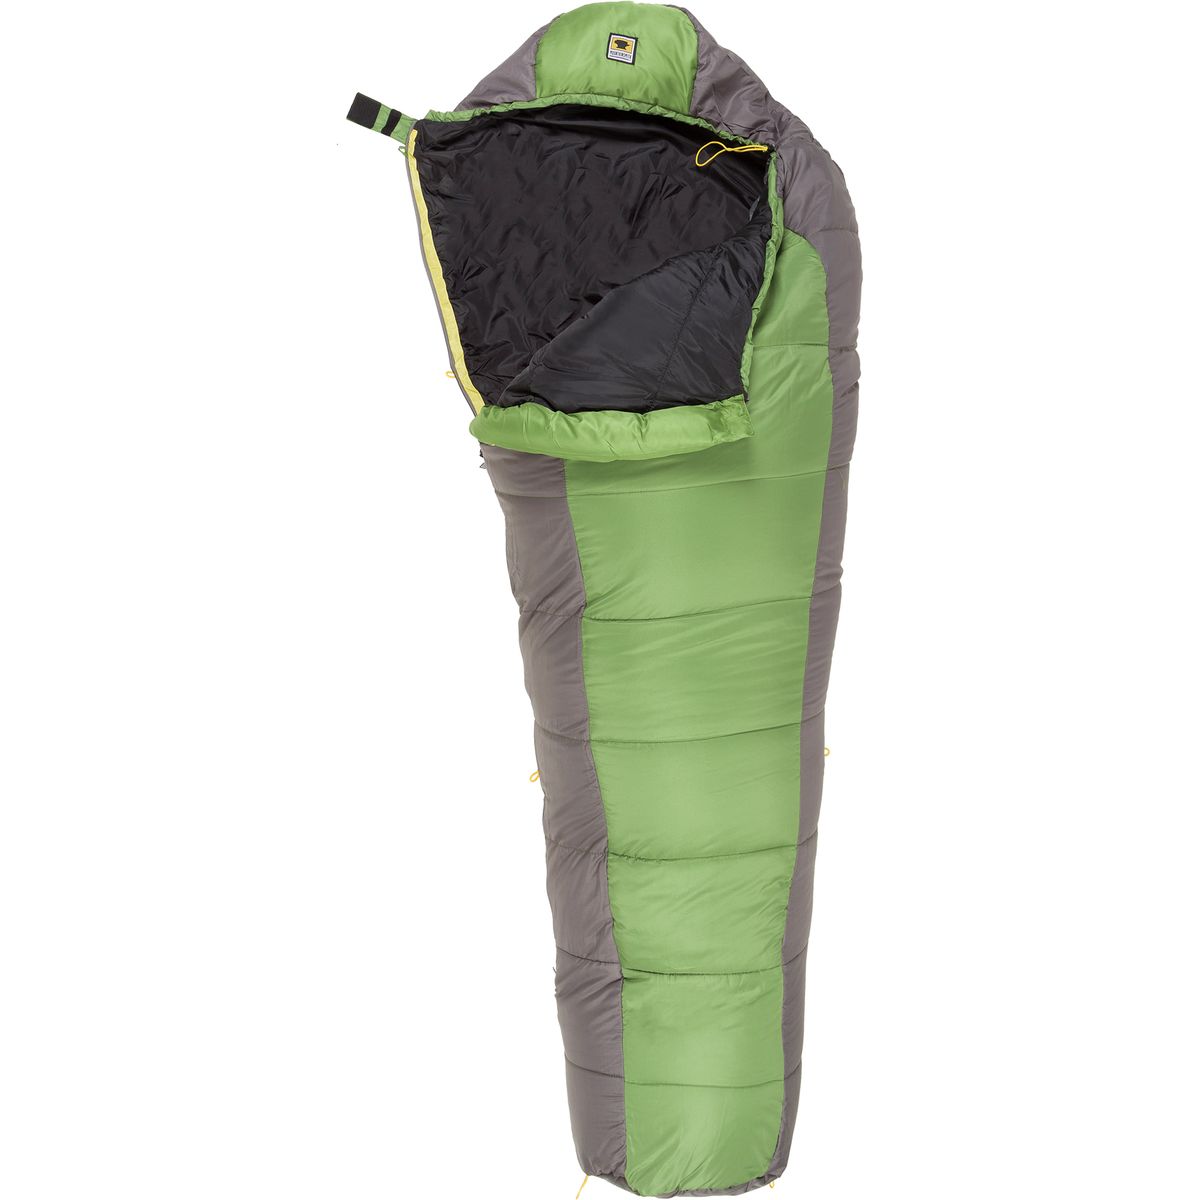 Mountainsmith Antero Sleeping Bag: 35F Synthetic